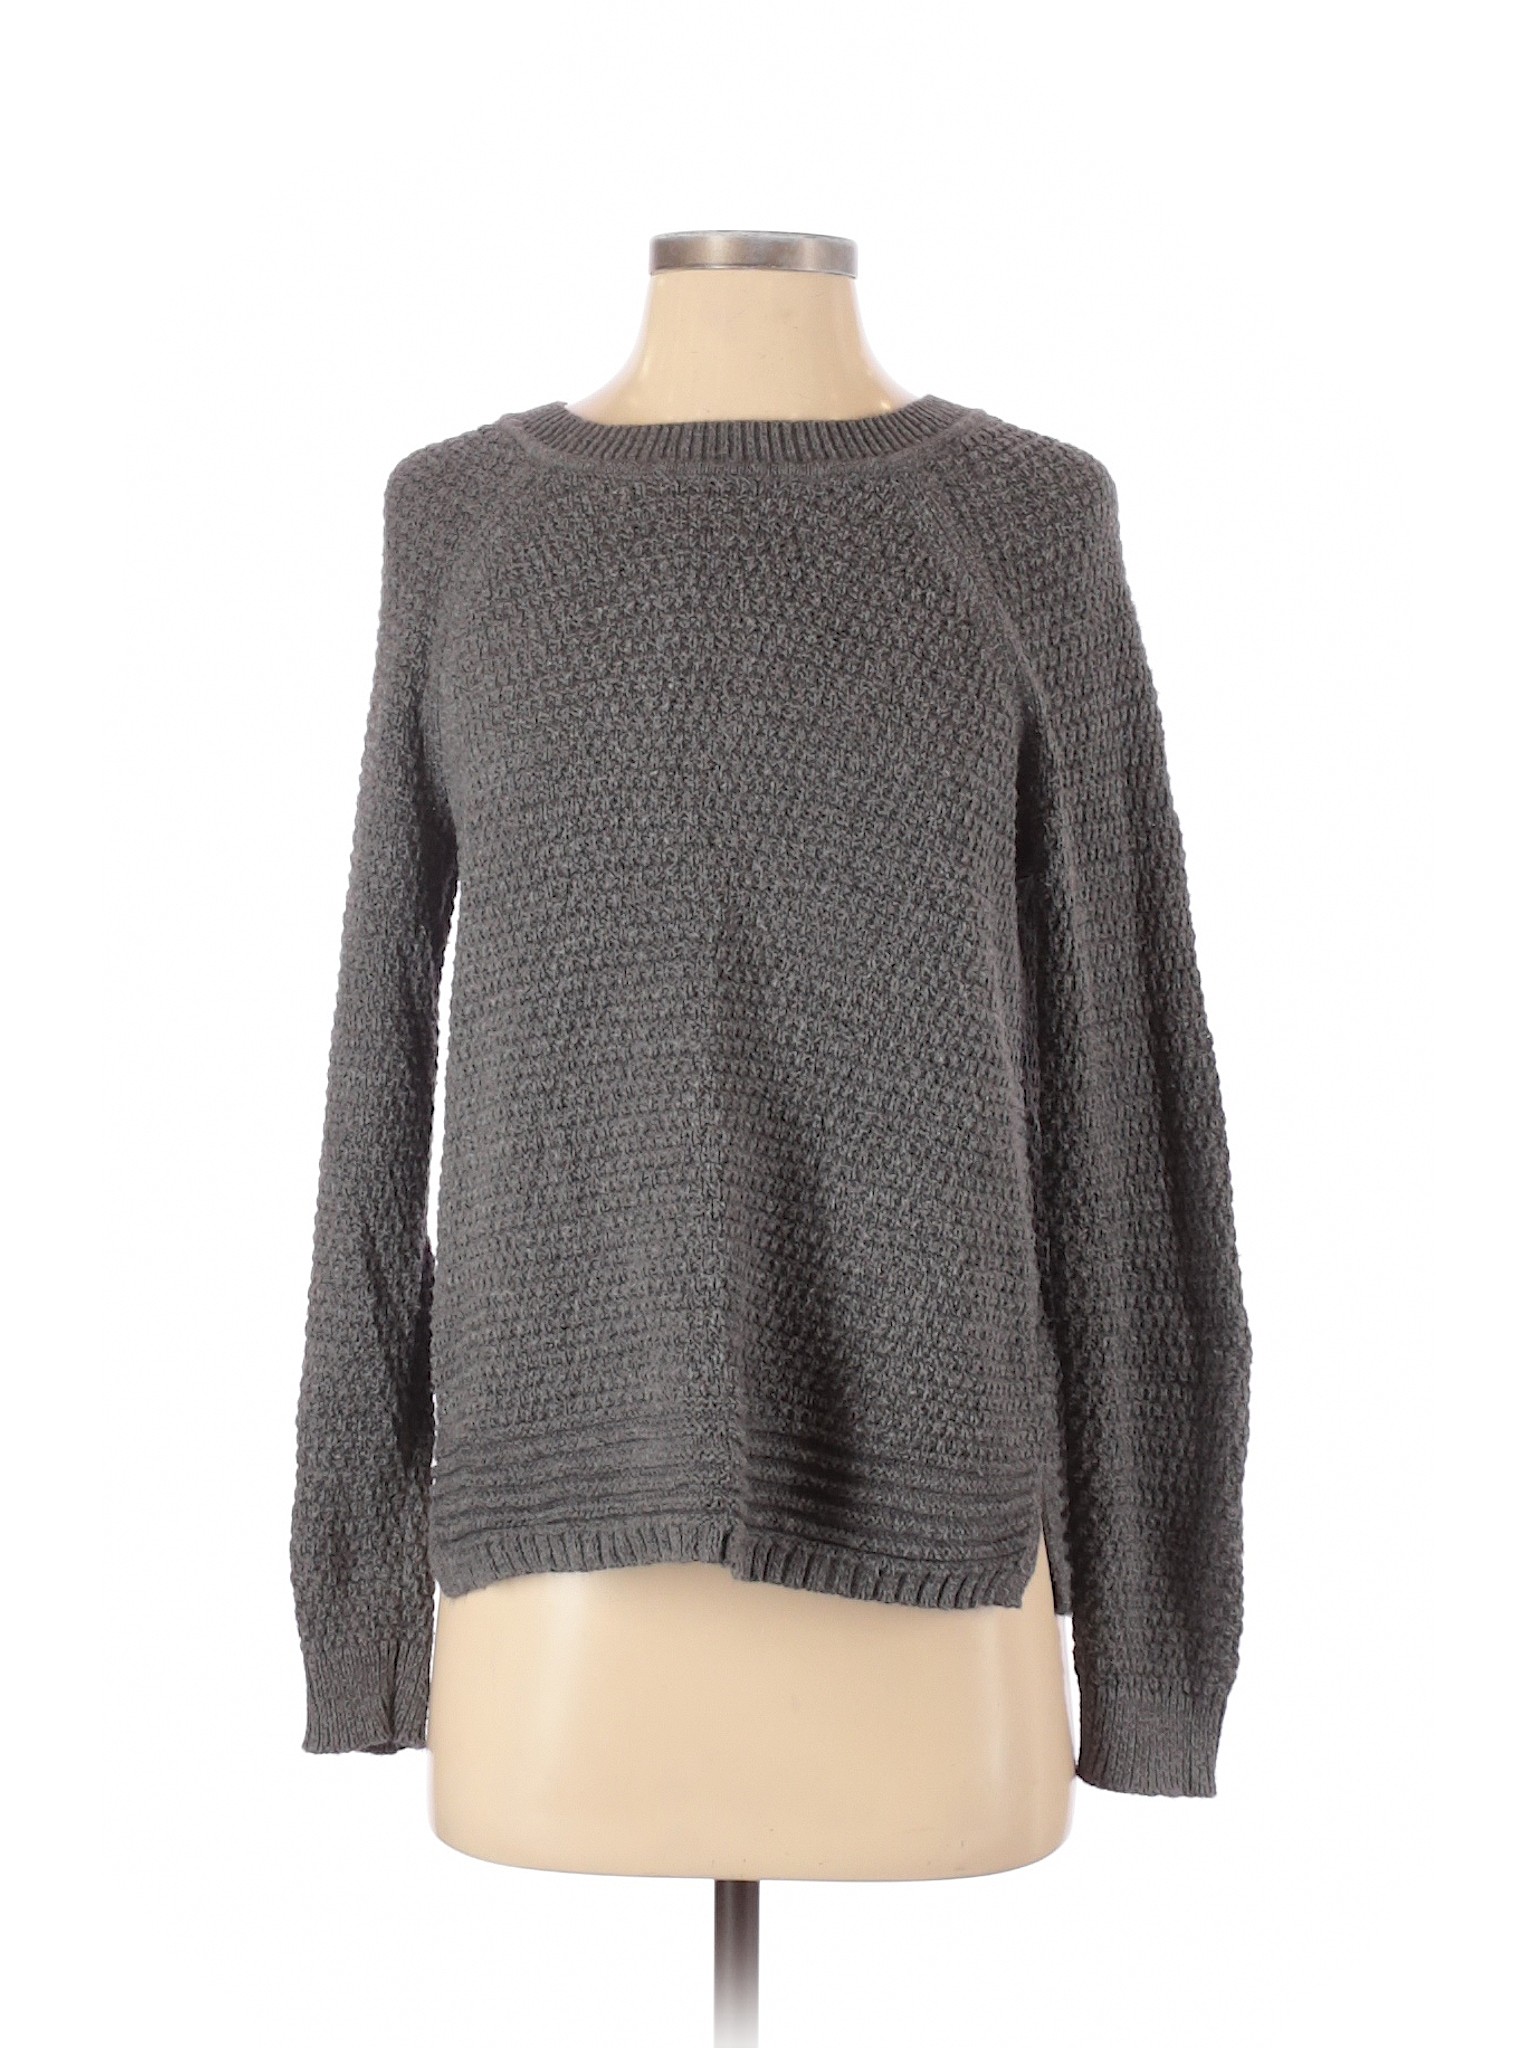 Old Navy Women Gray Pullover Sweater S | eBay